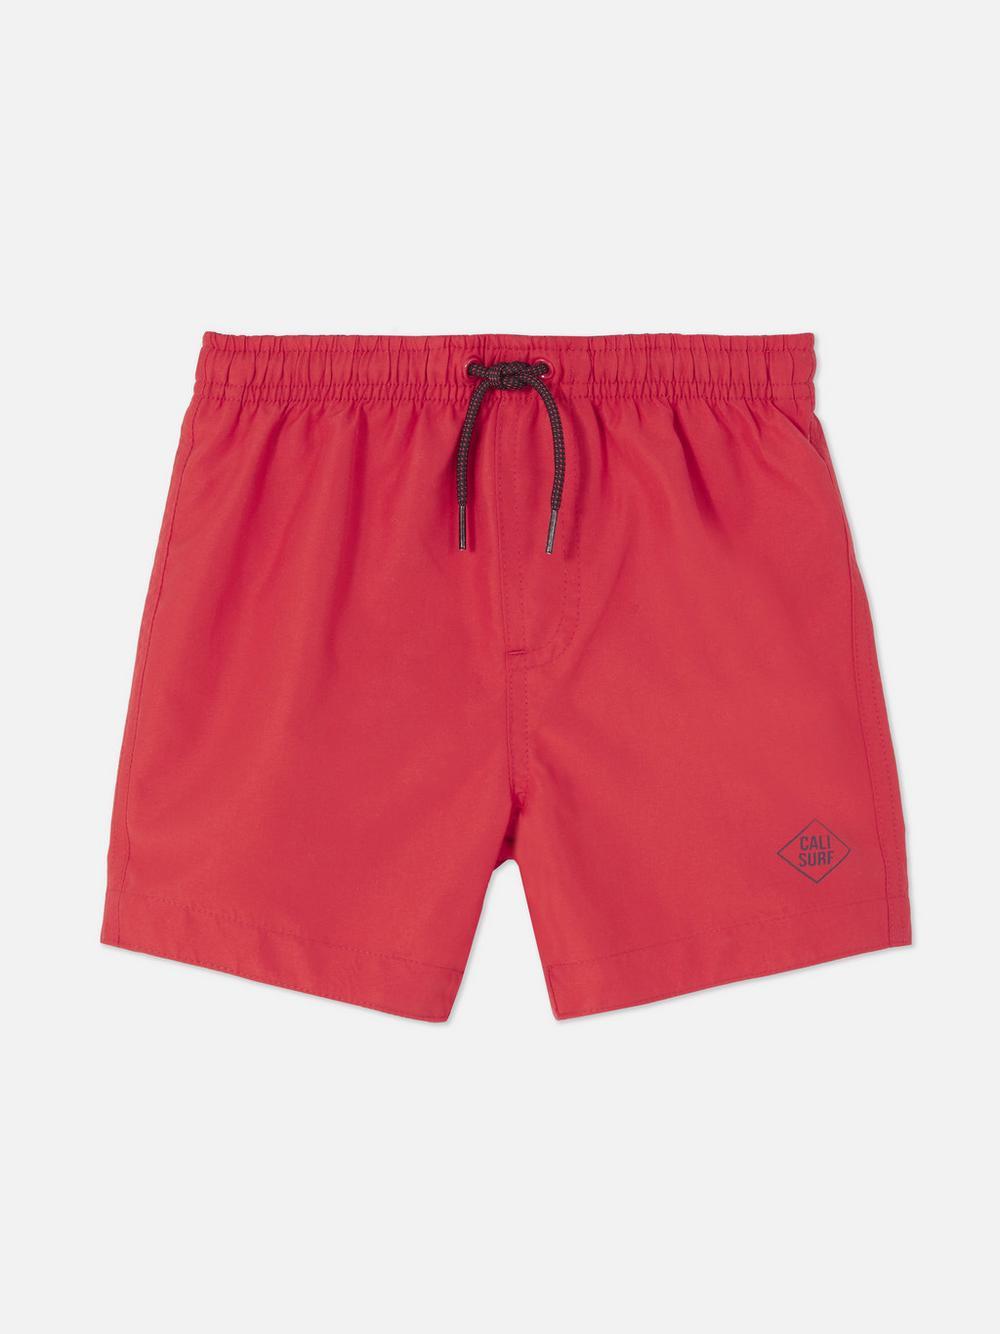 Kids red swim shorts